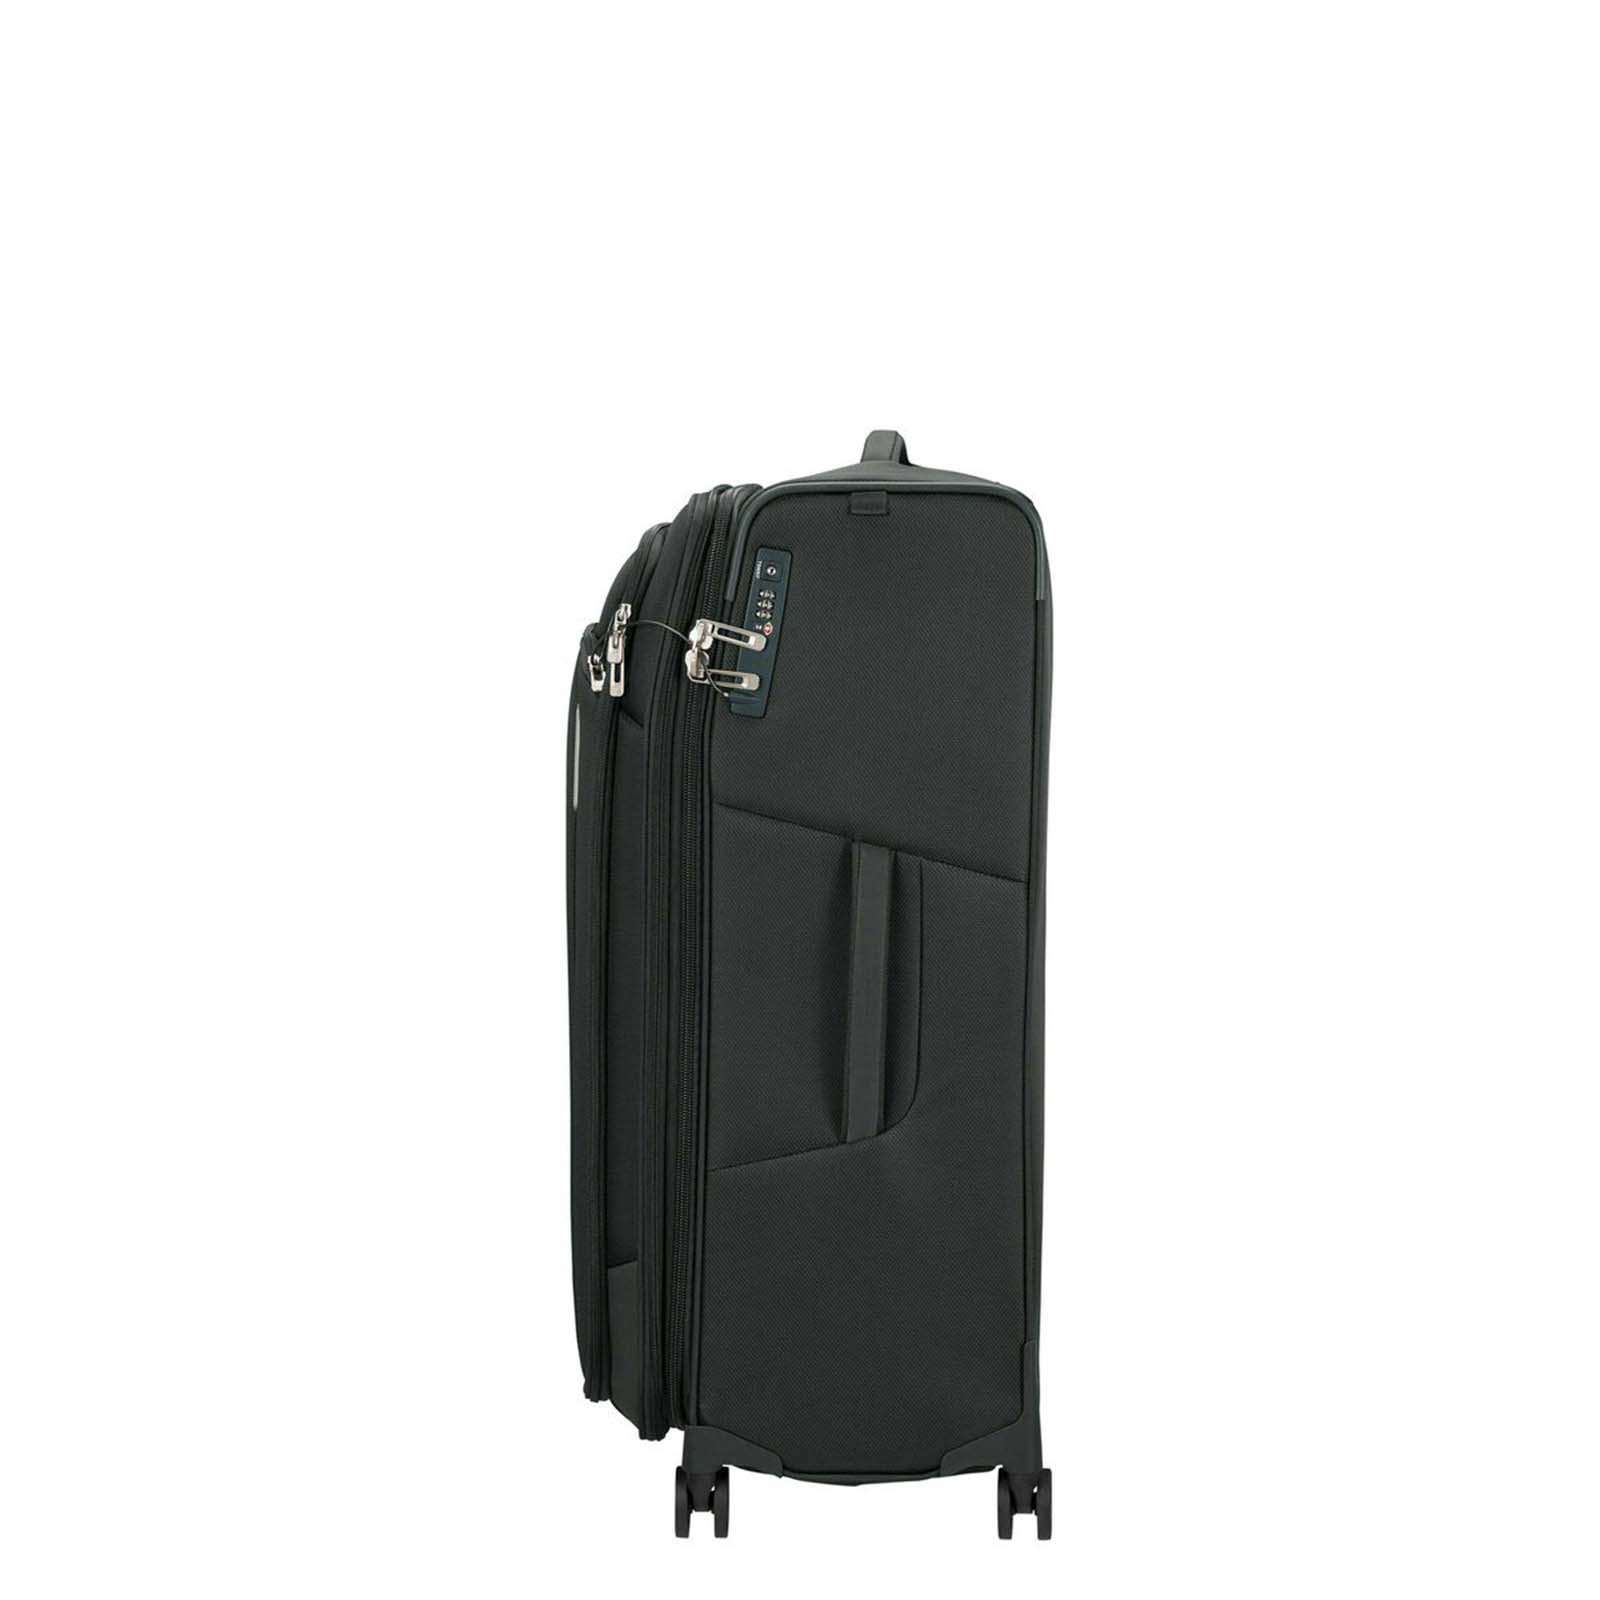 Samsonite-Respark-78cm-Suitcase-Forest-Green-Handle